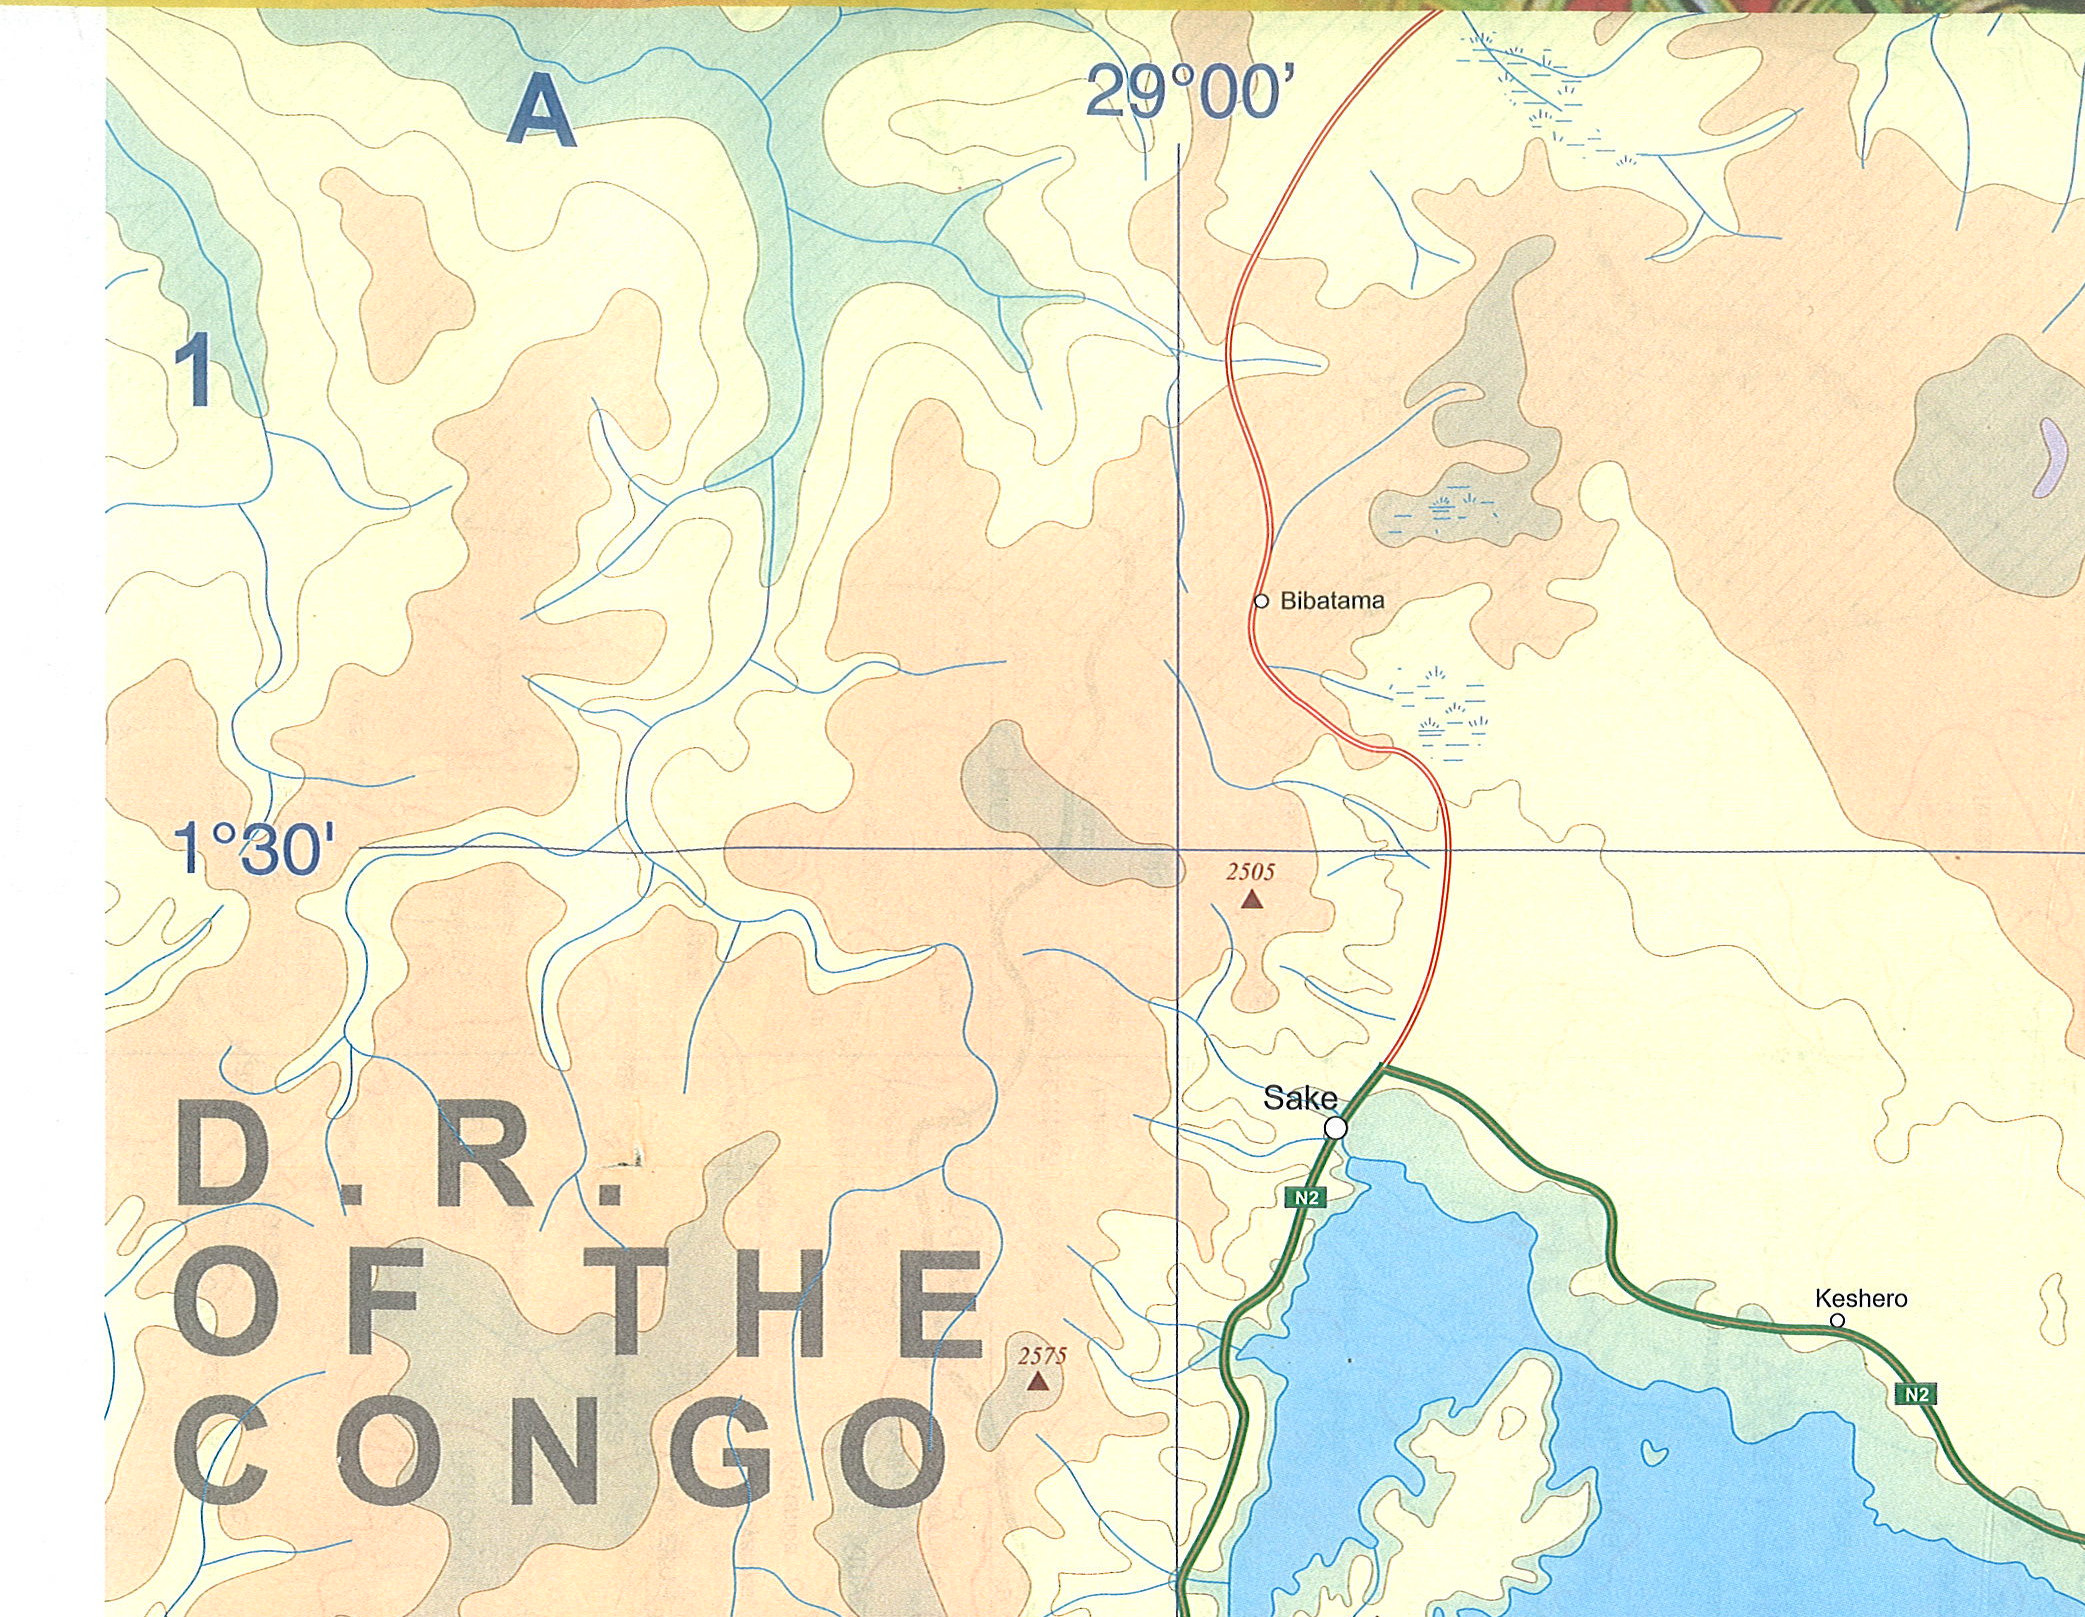 Rwanda Map Scale : 1/300,000 A1